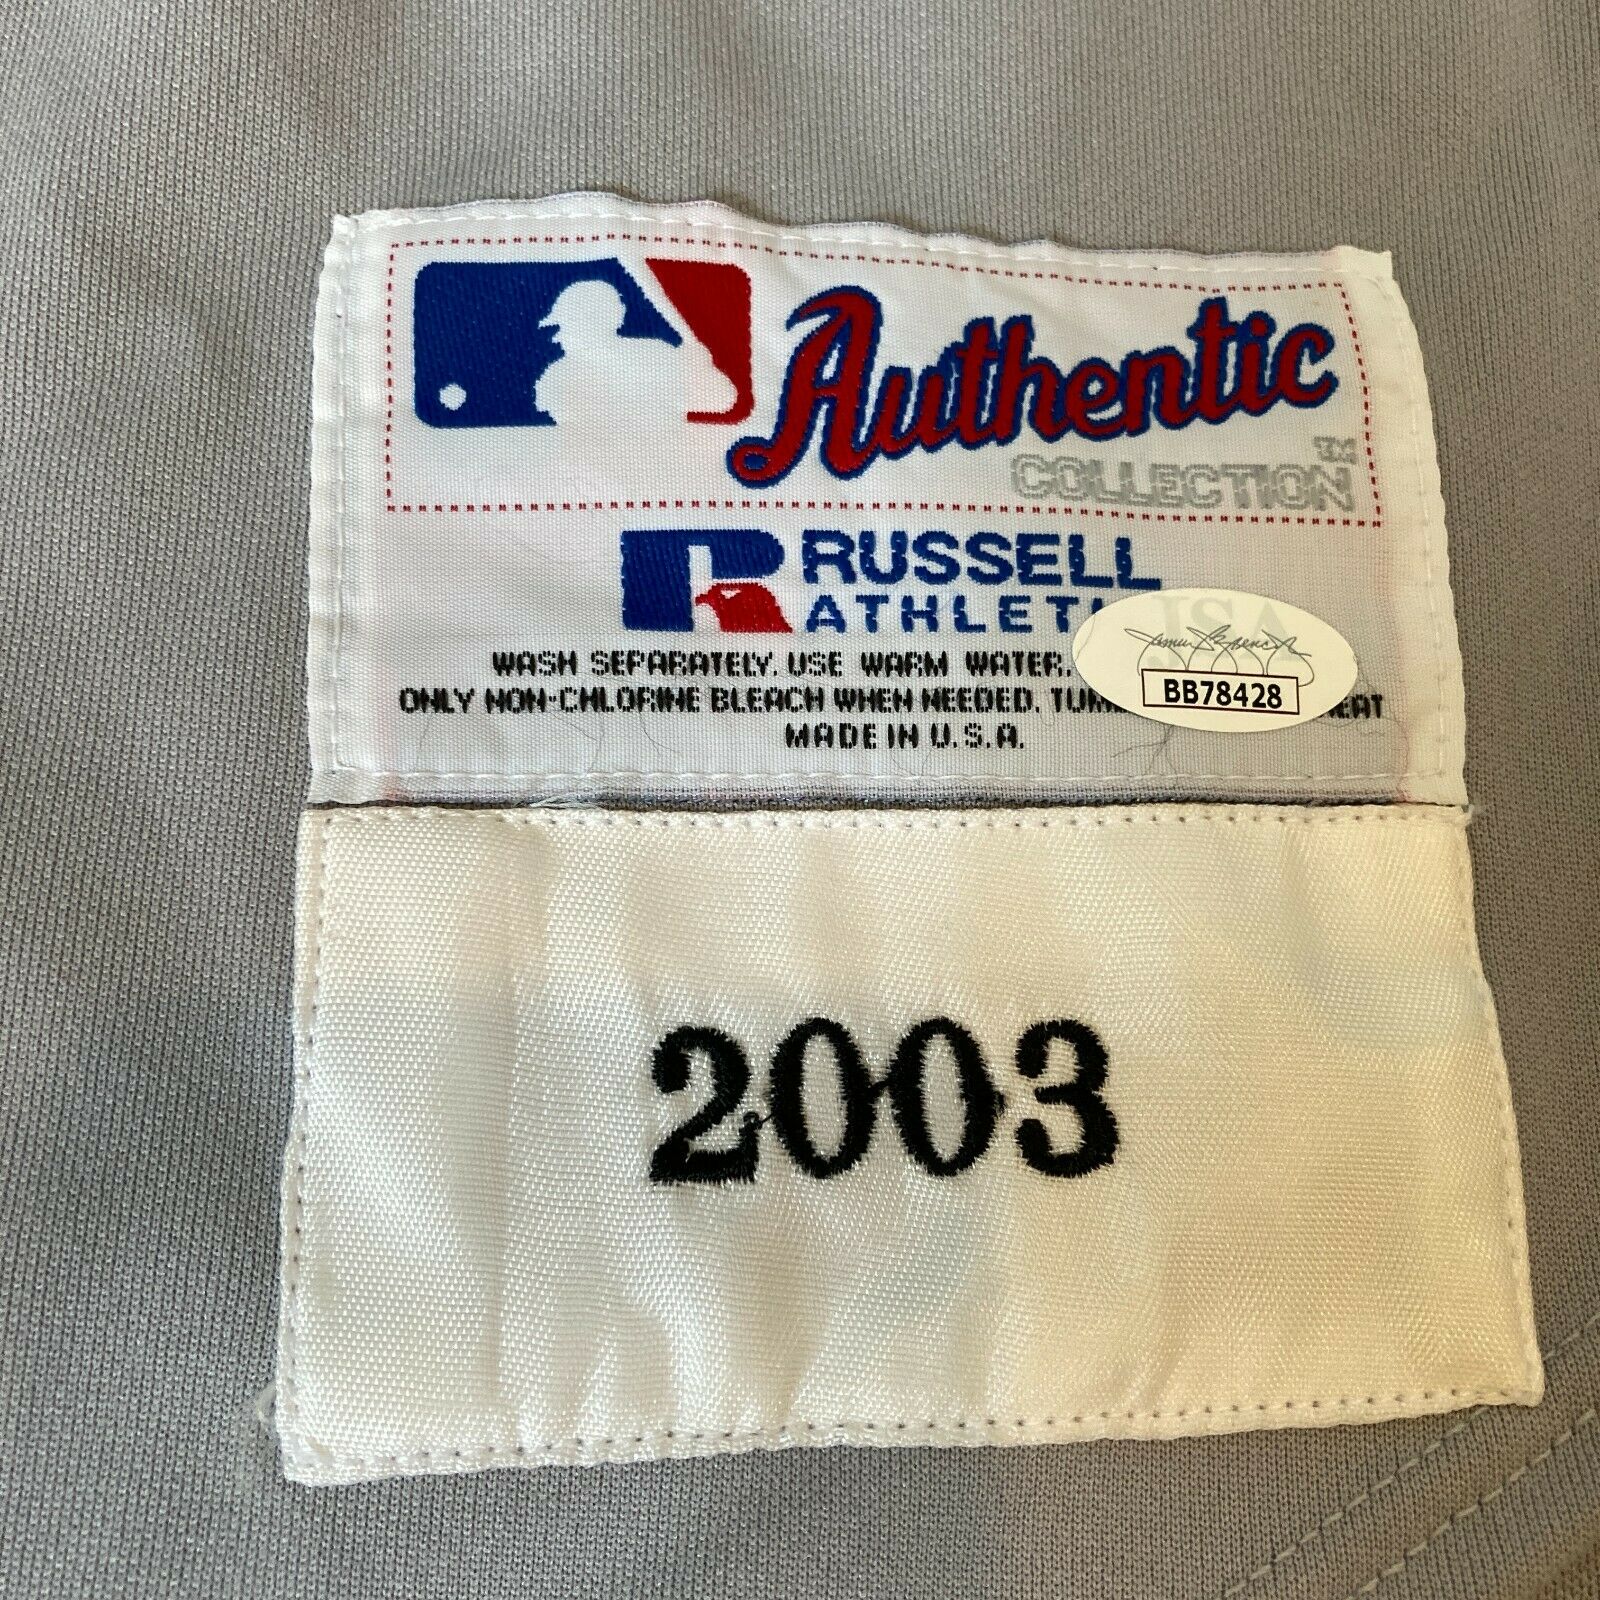 Manny Ramirez Signed Inscribed 2003 Boston Red Sox Game Used Jersey JSA COA